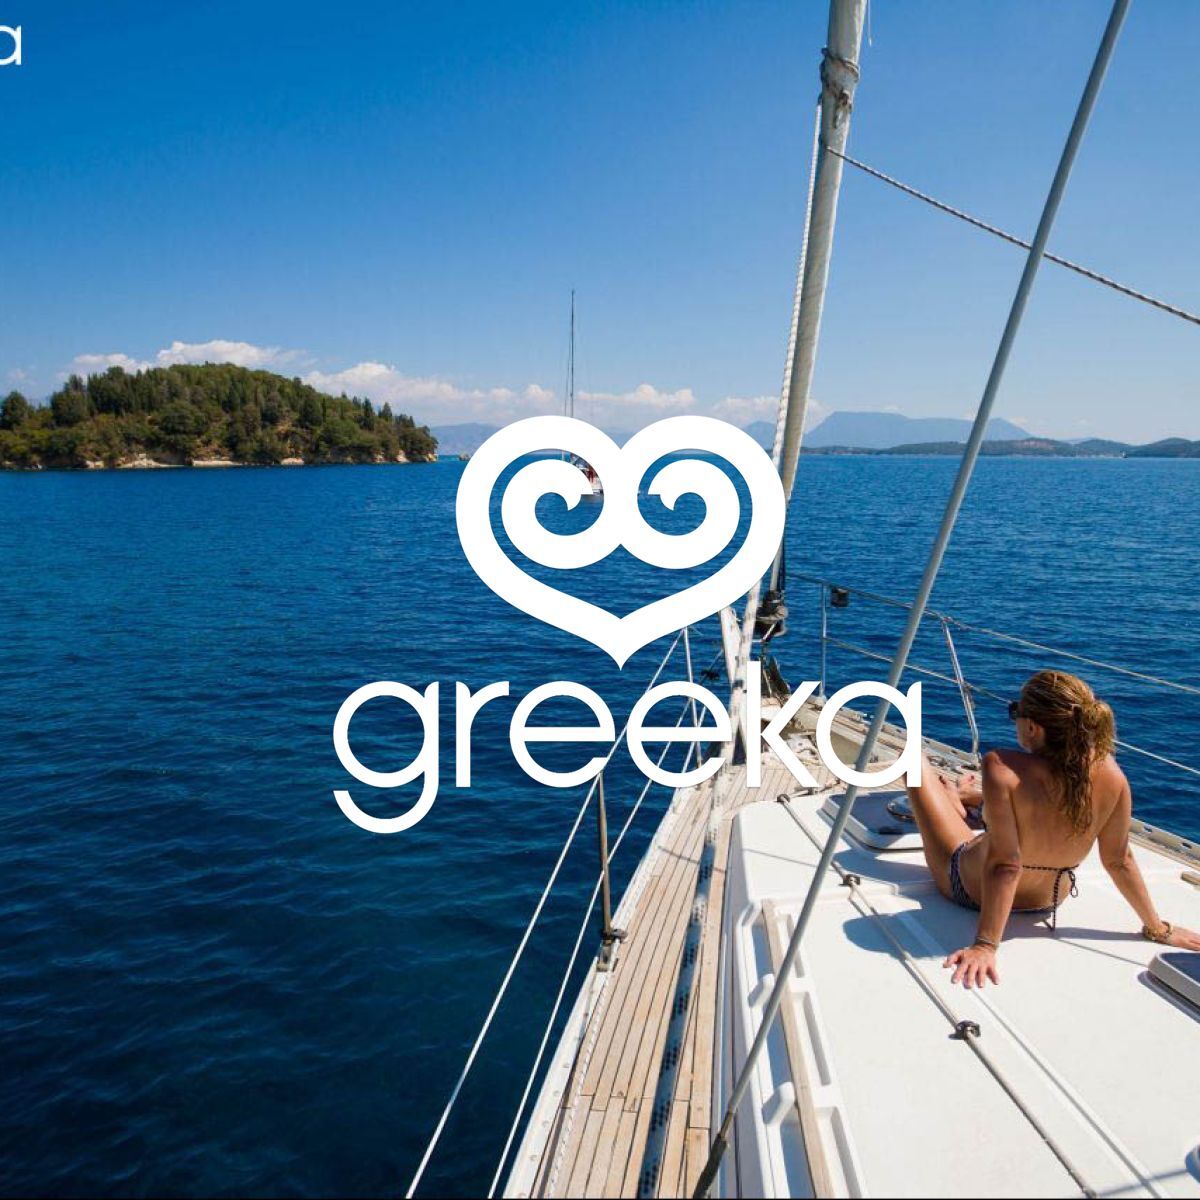 weekly yacht charter greece